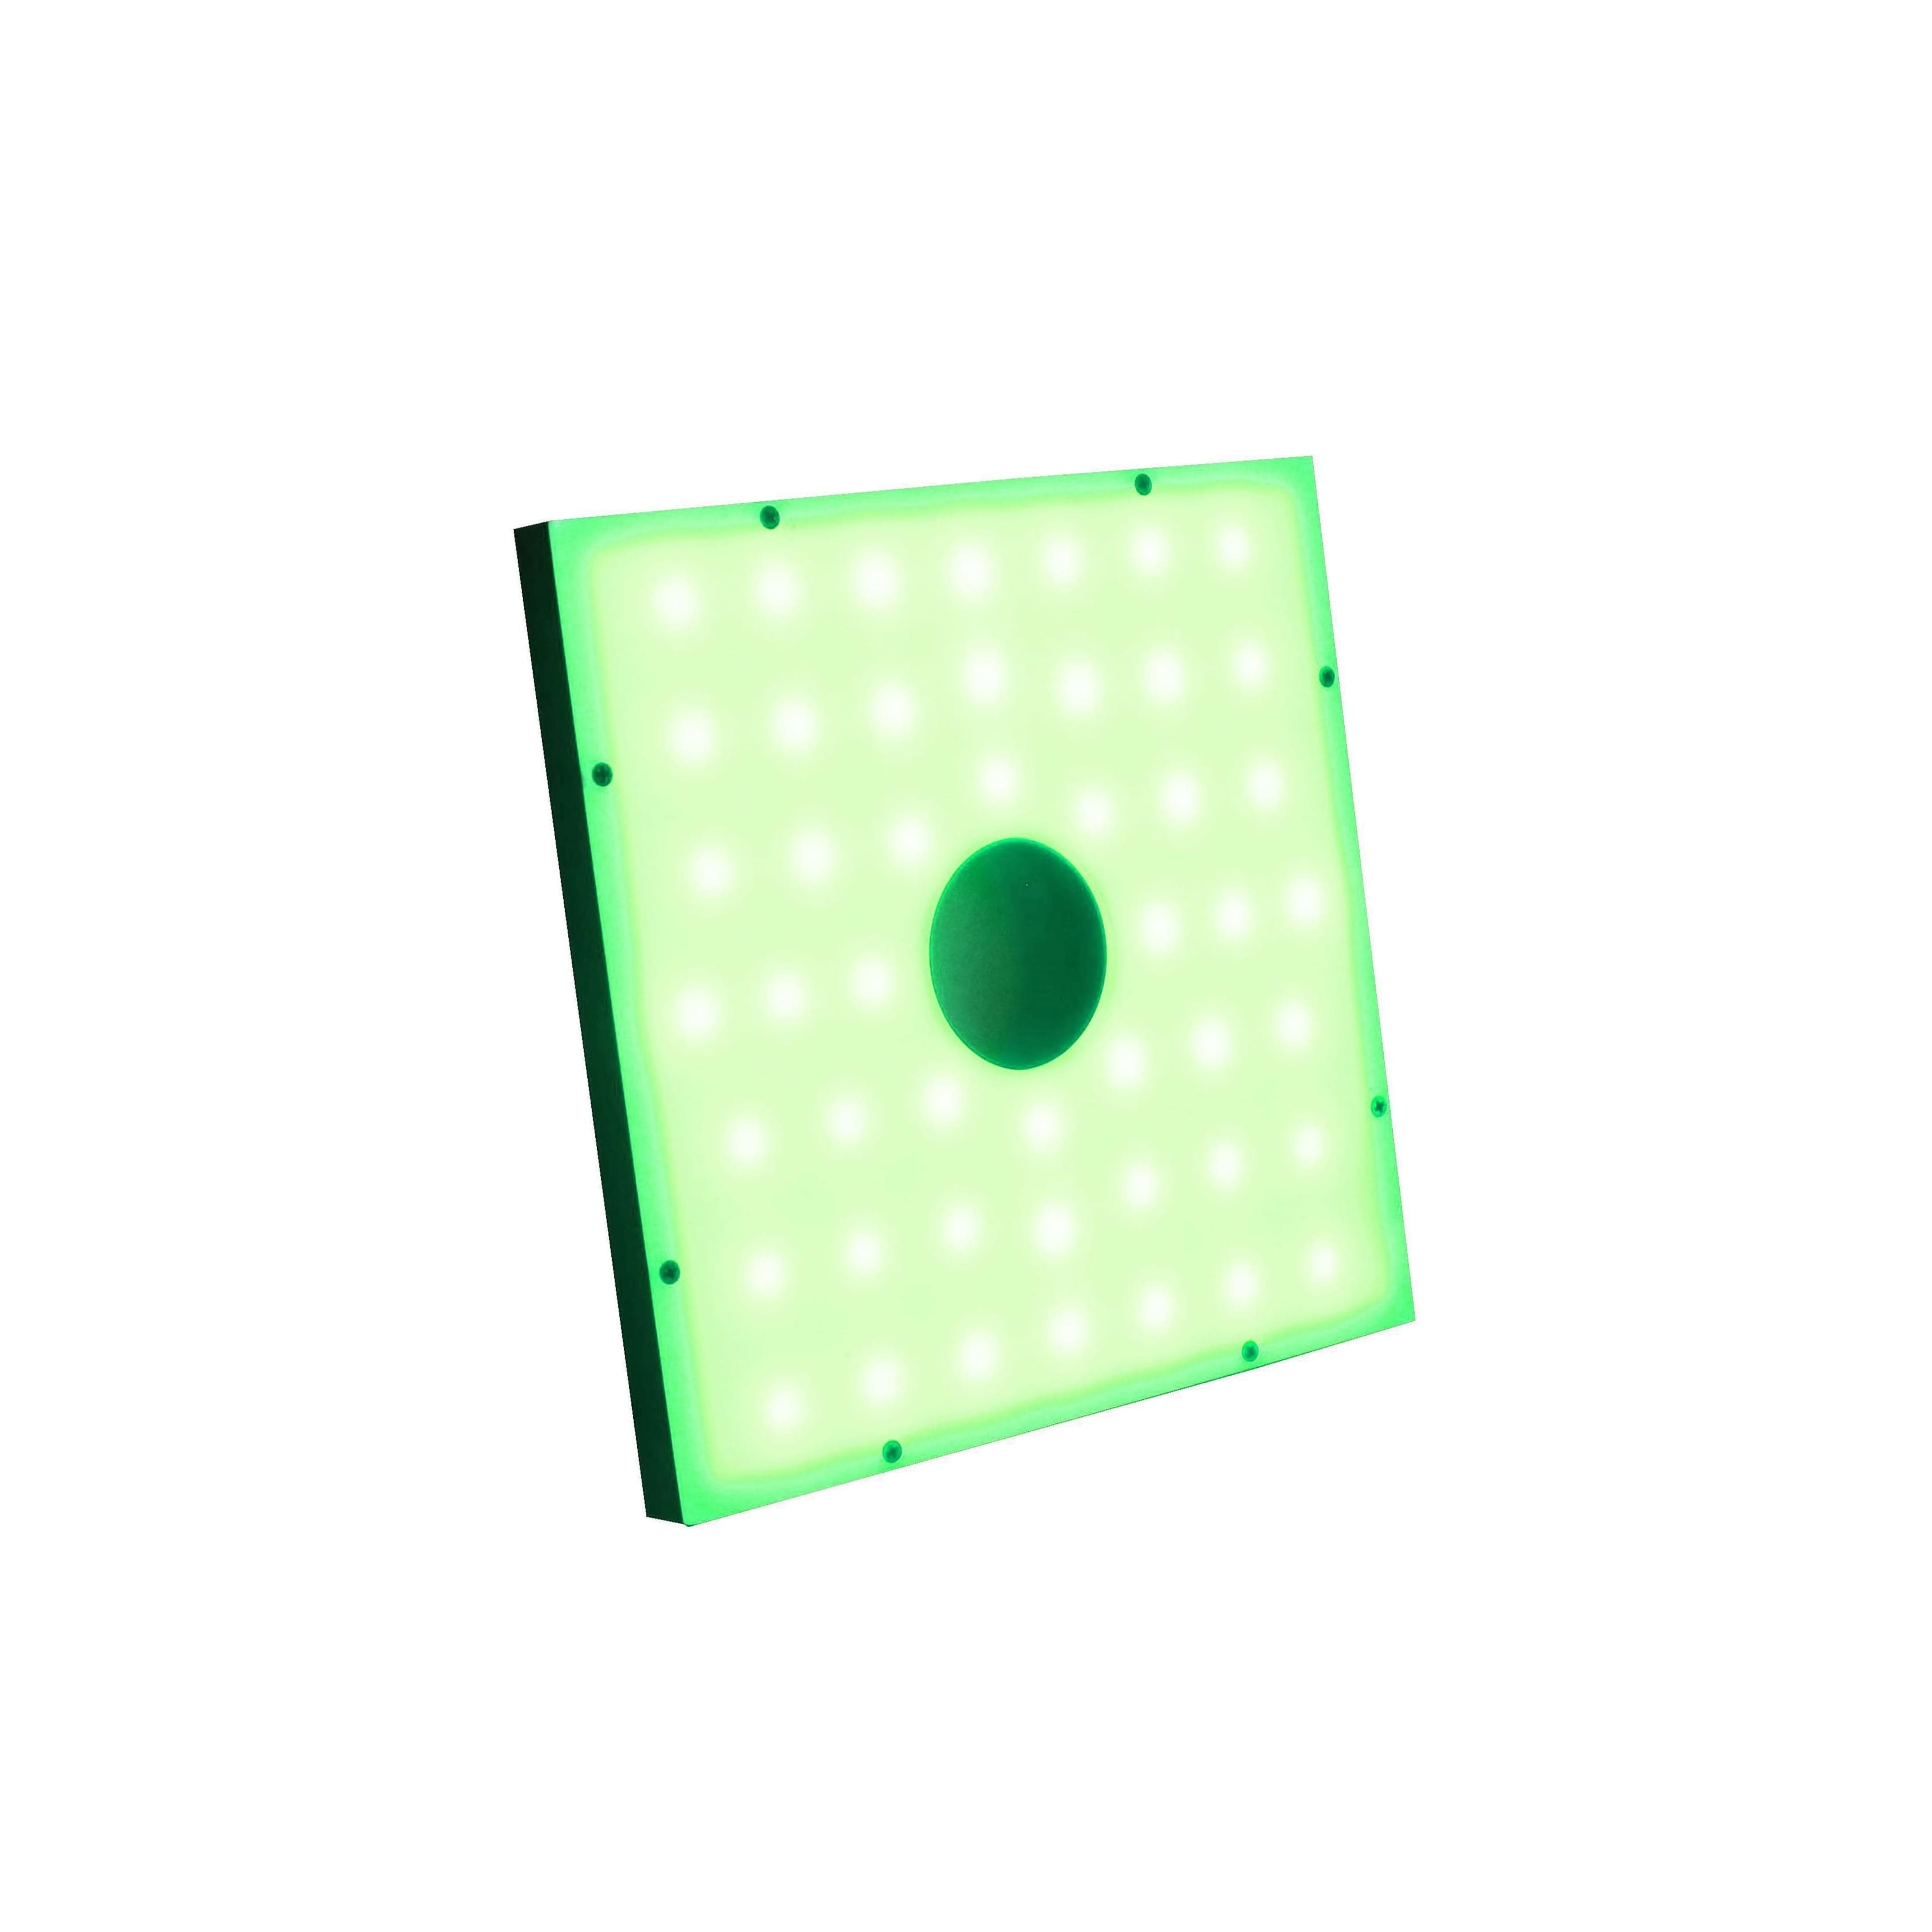 DSQ2-300/300 Diffused Square Panel Lights – Green